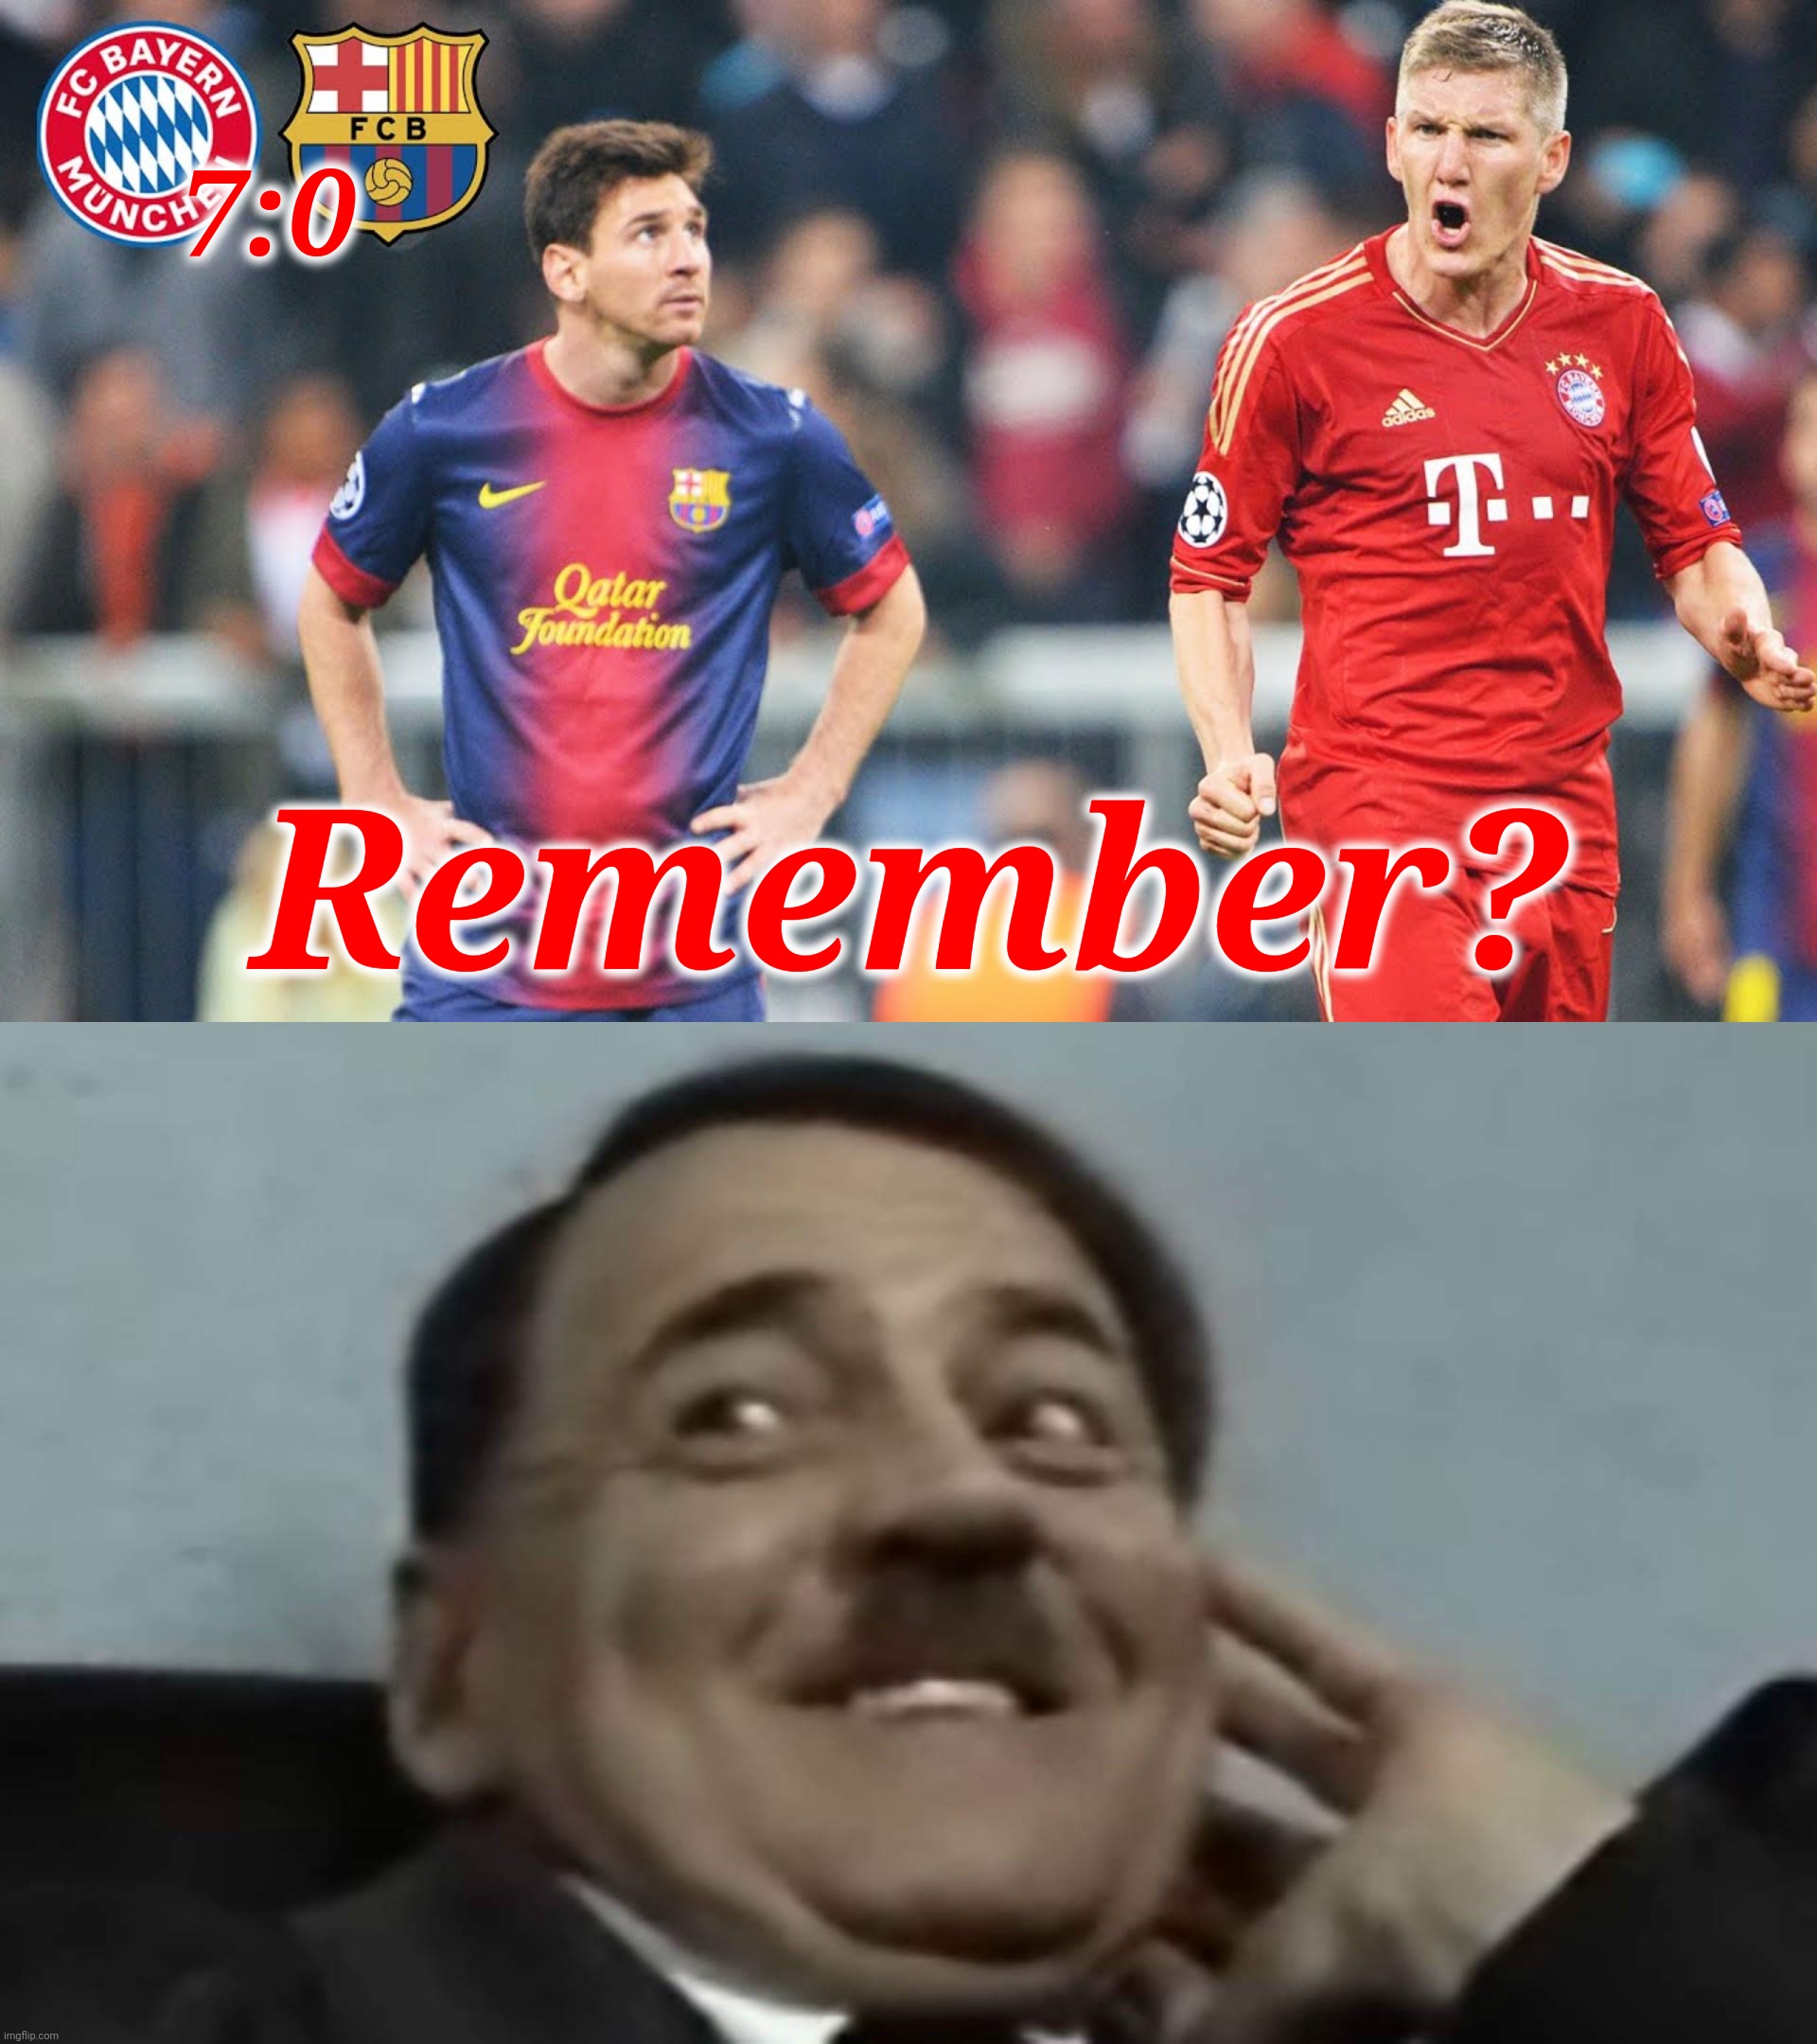 Bayern Munich 7:0 Barcelona 2013 | 7:0; Remember? | image tagged in memes,funny,football,soccer,bayern munich,barcelona | made w/ Imgflip meme maker